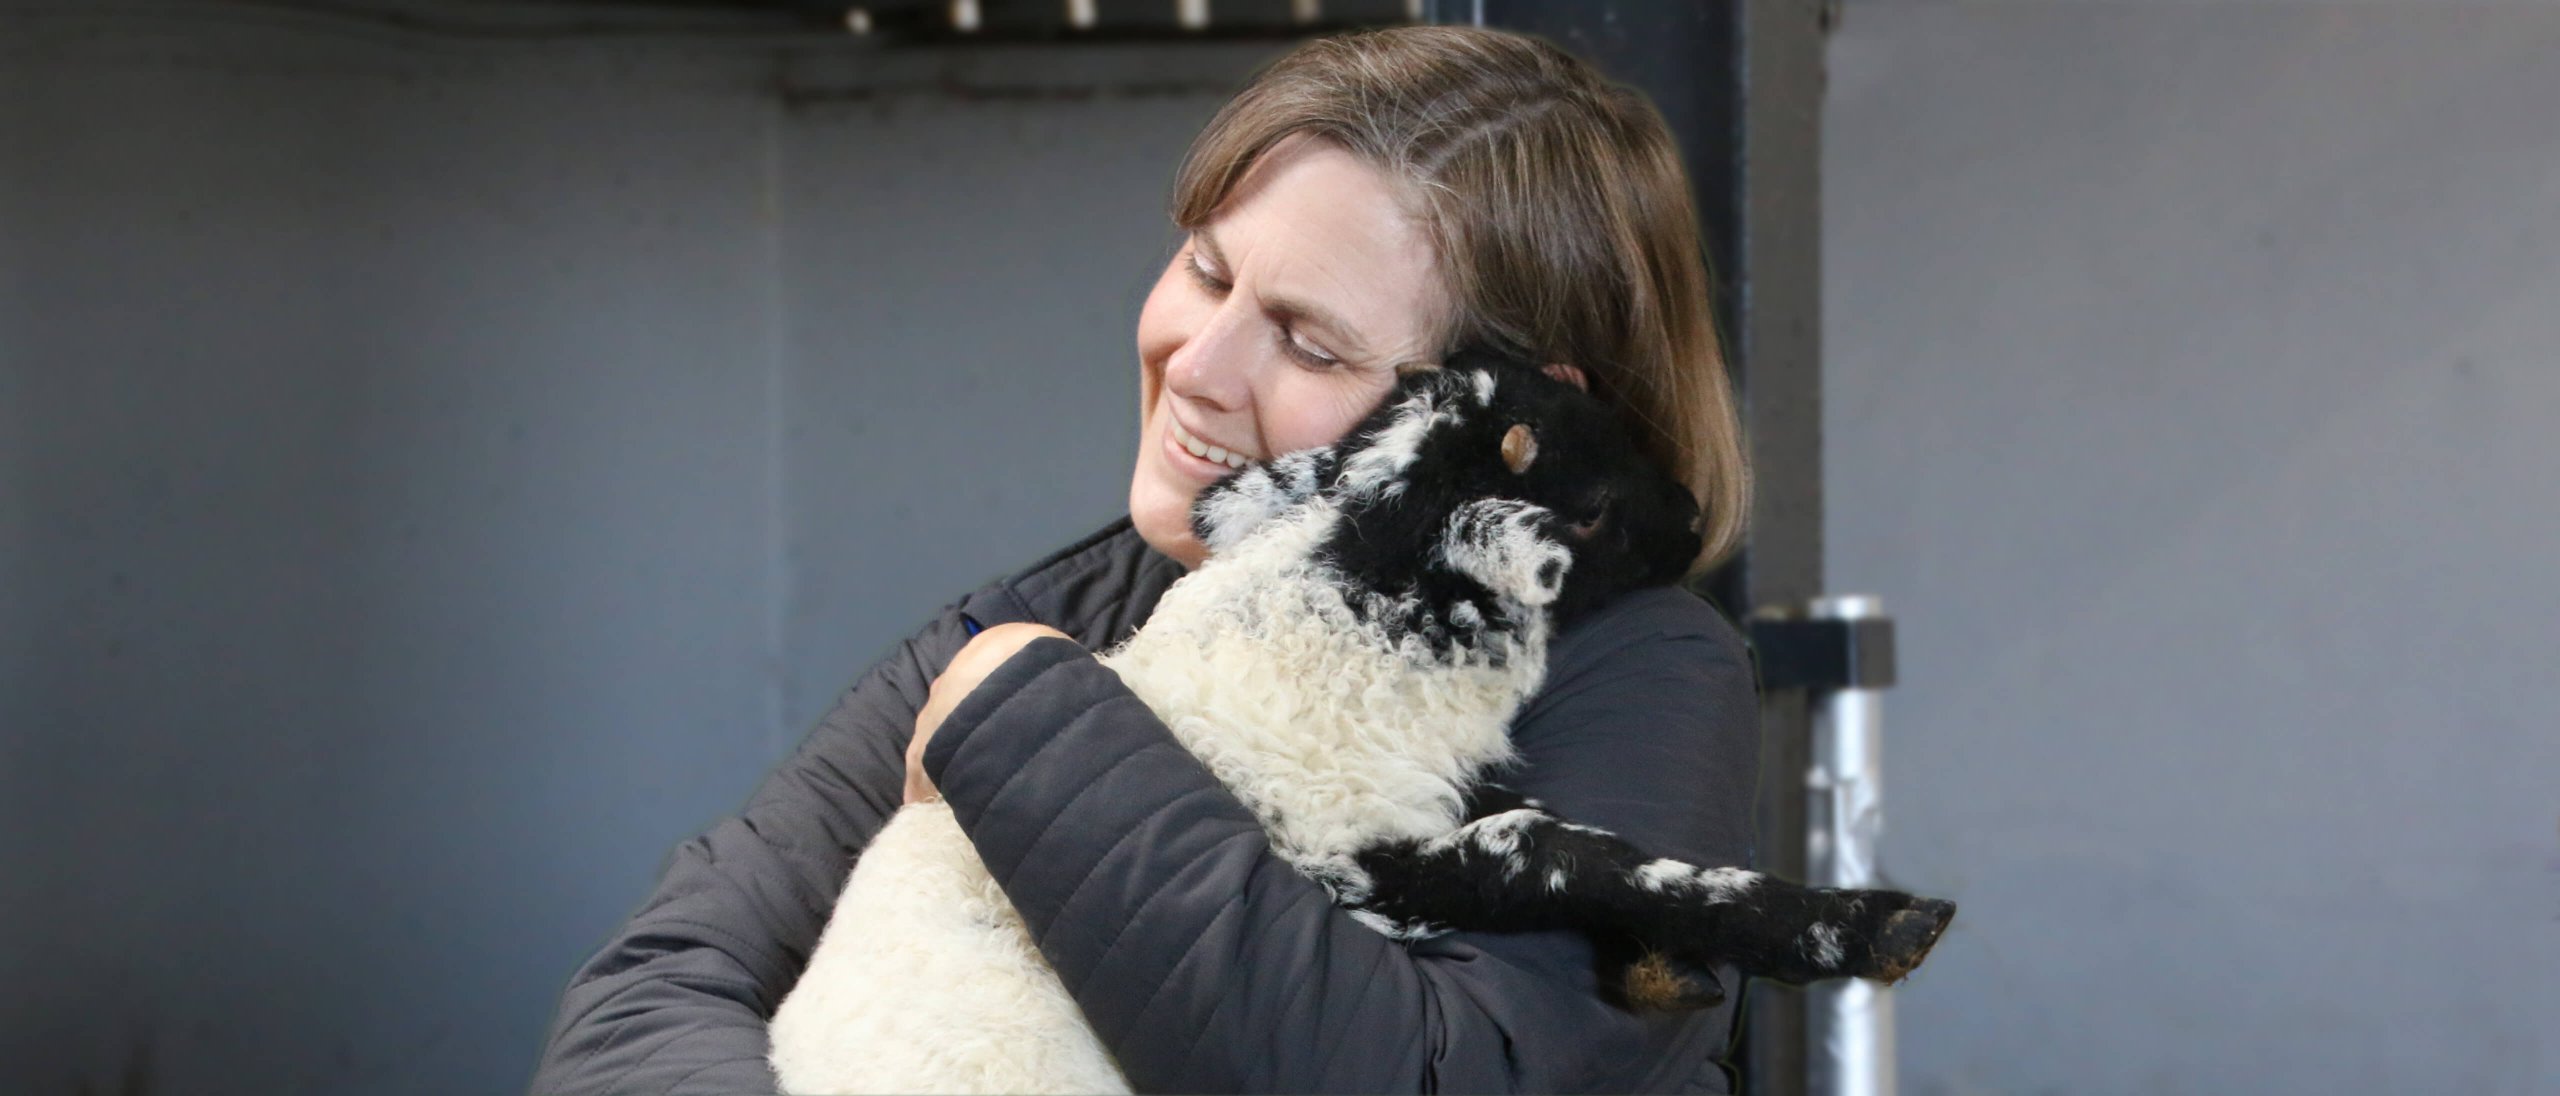 Vagabond tour guest cuddling lamb in Ireland